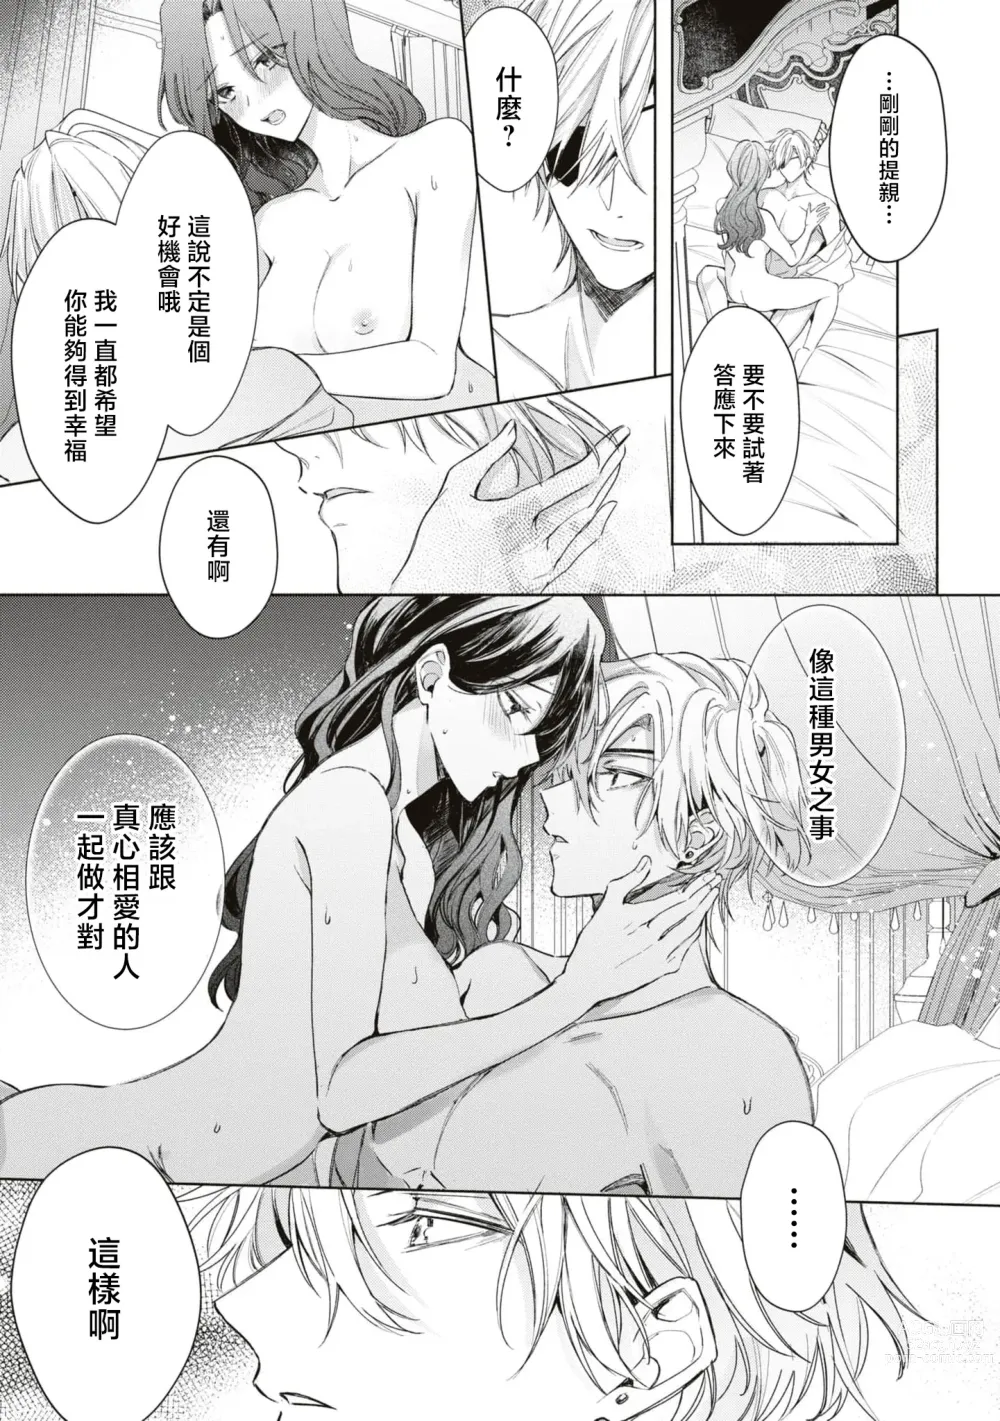 Page 25 of manga 女佣人被痴情的年下骑士爱到绝顶